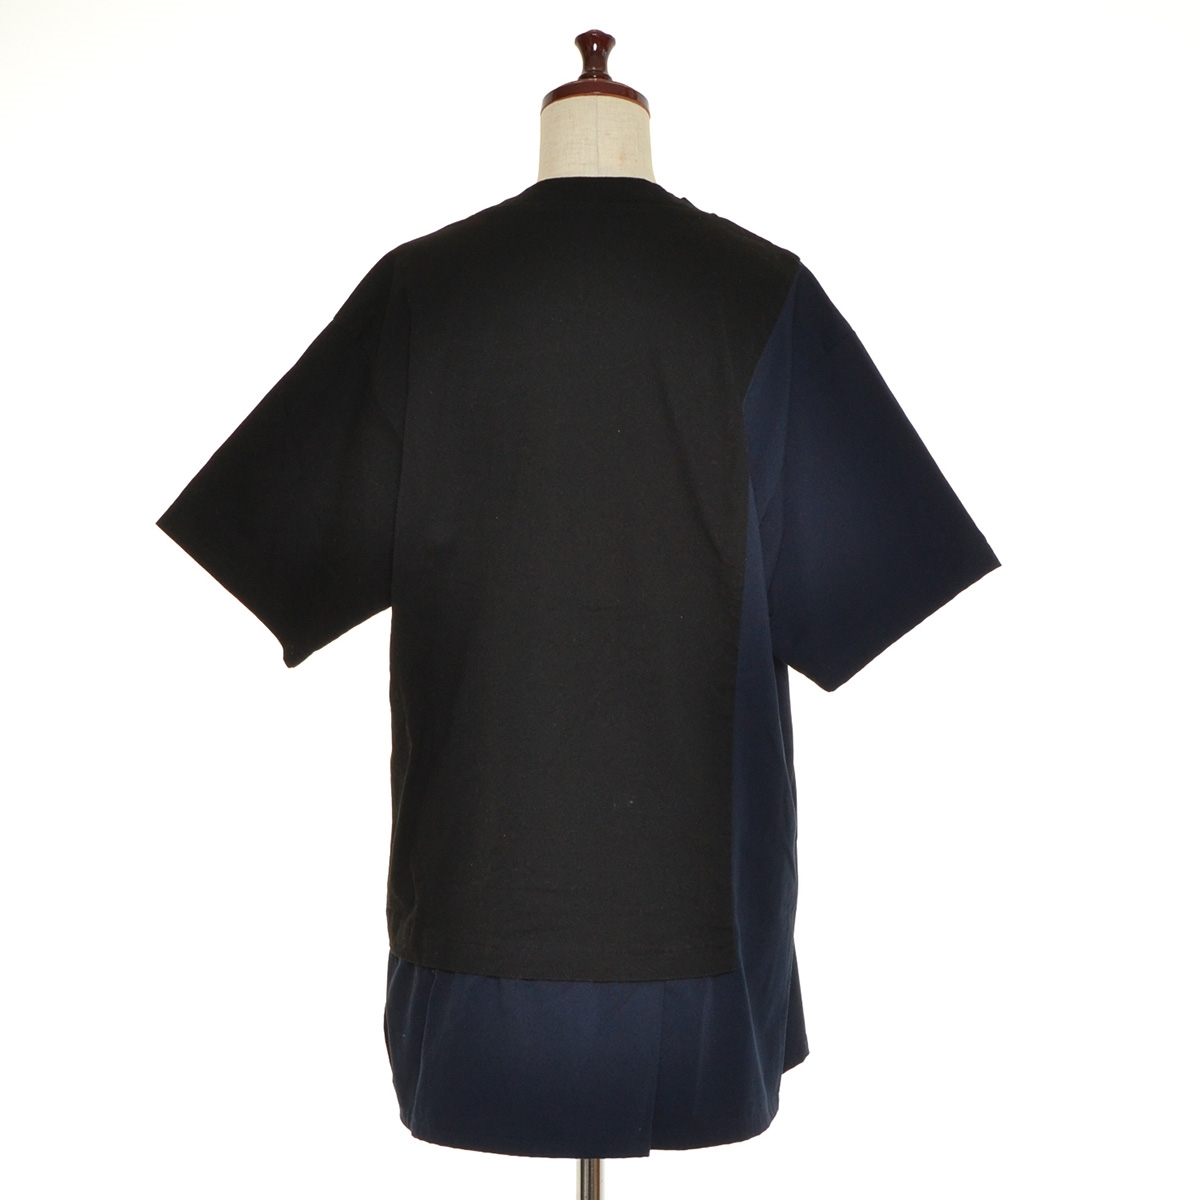 *483969 FRAPBOIS Frapbois Bigi * short sleeves cut and sewn T-shirt unusual material switch color scheme pocket tunic T size 2 lady's black 